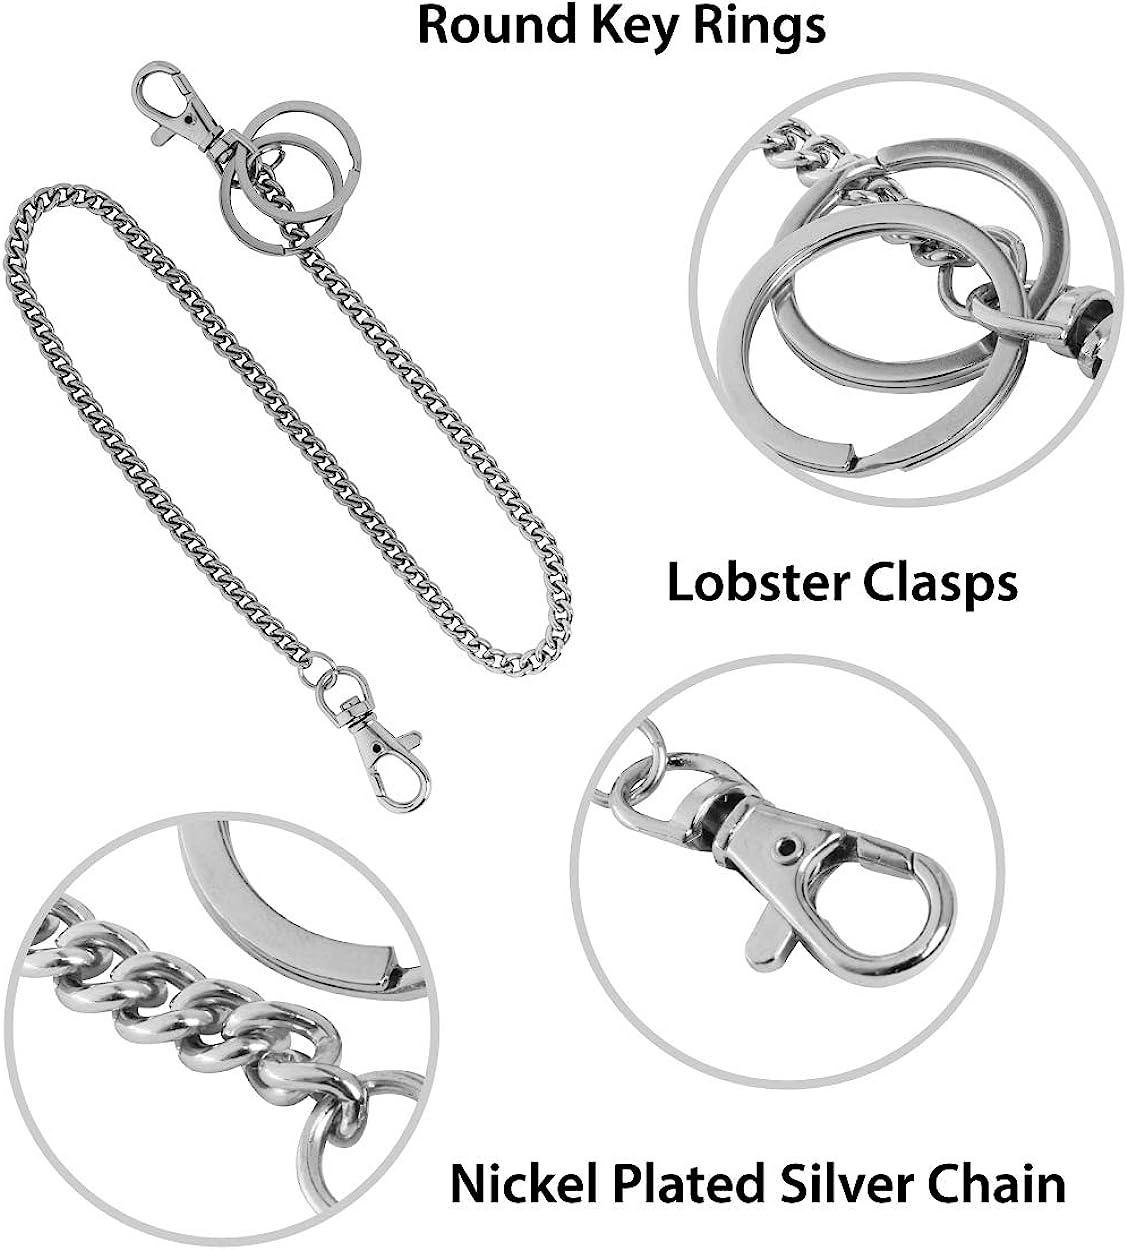 Nickel Plated Steel Metal Belt Clip - China Metal Clip and Belt